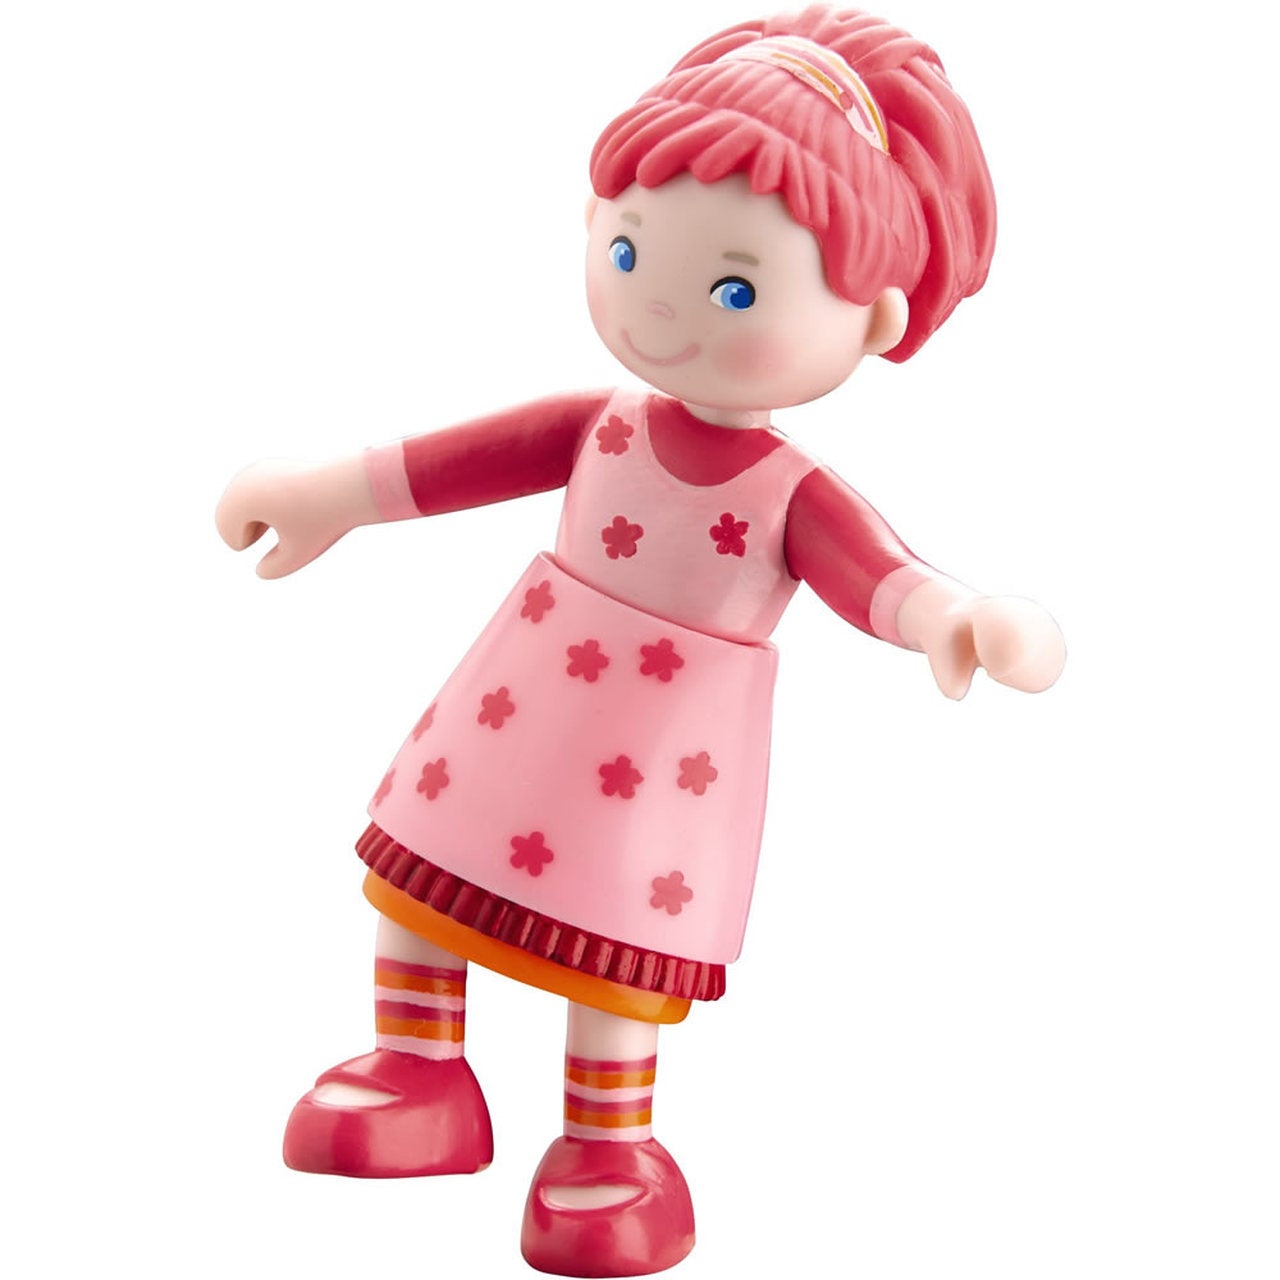 HABA Little Friends Bendy Doll Lilli - ANB Baby -baby boy doll